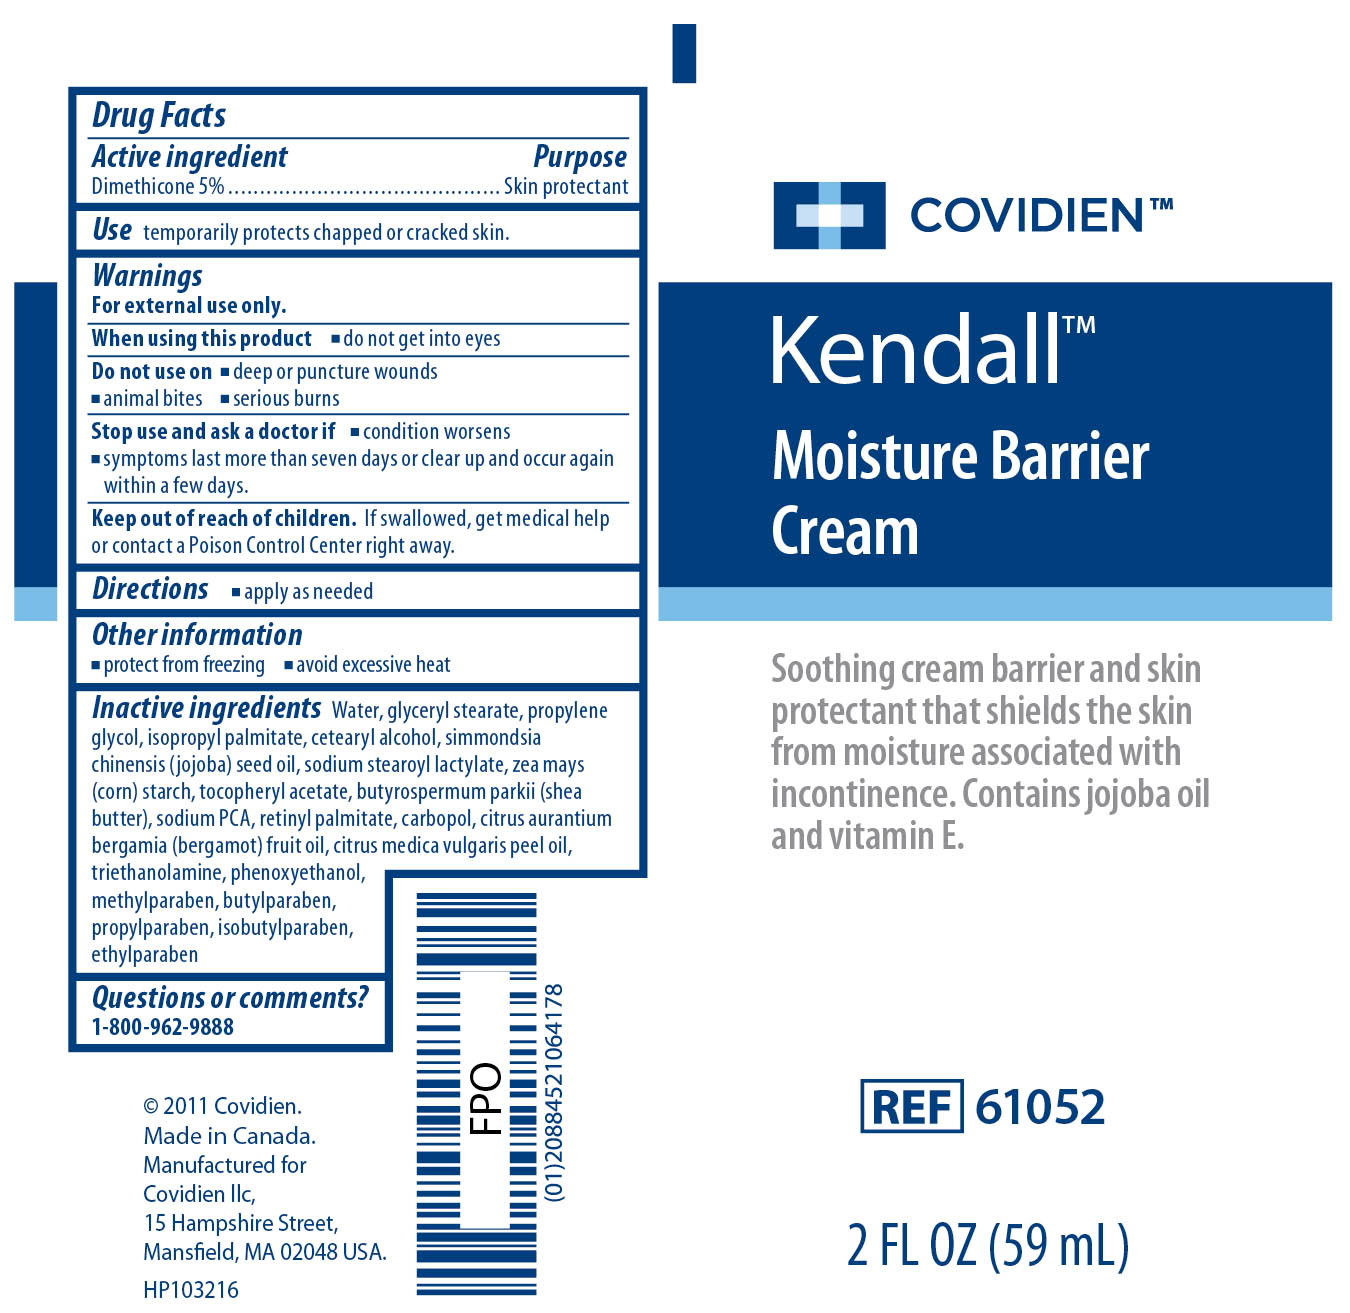 Image of Kendall Moisture Barrier Cream 2 Fl oz Label